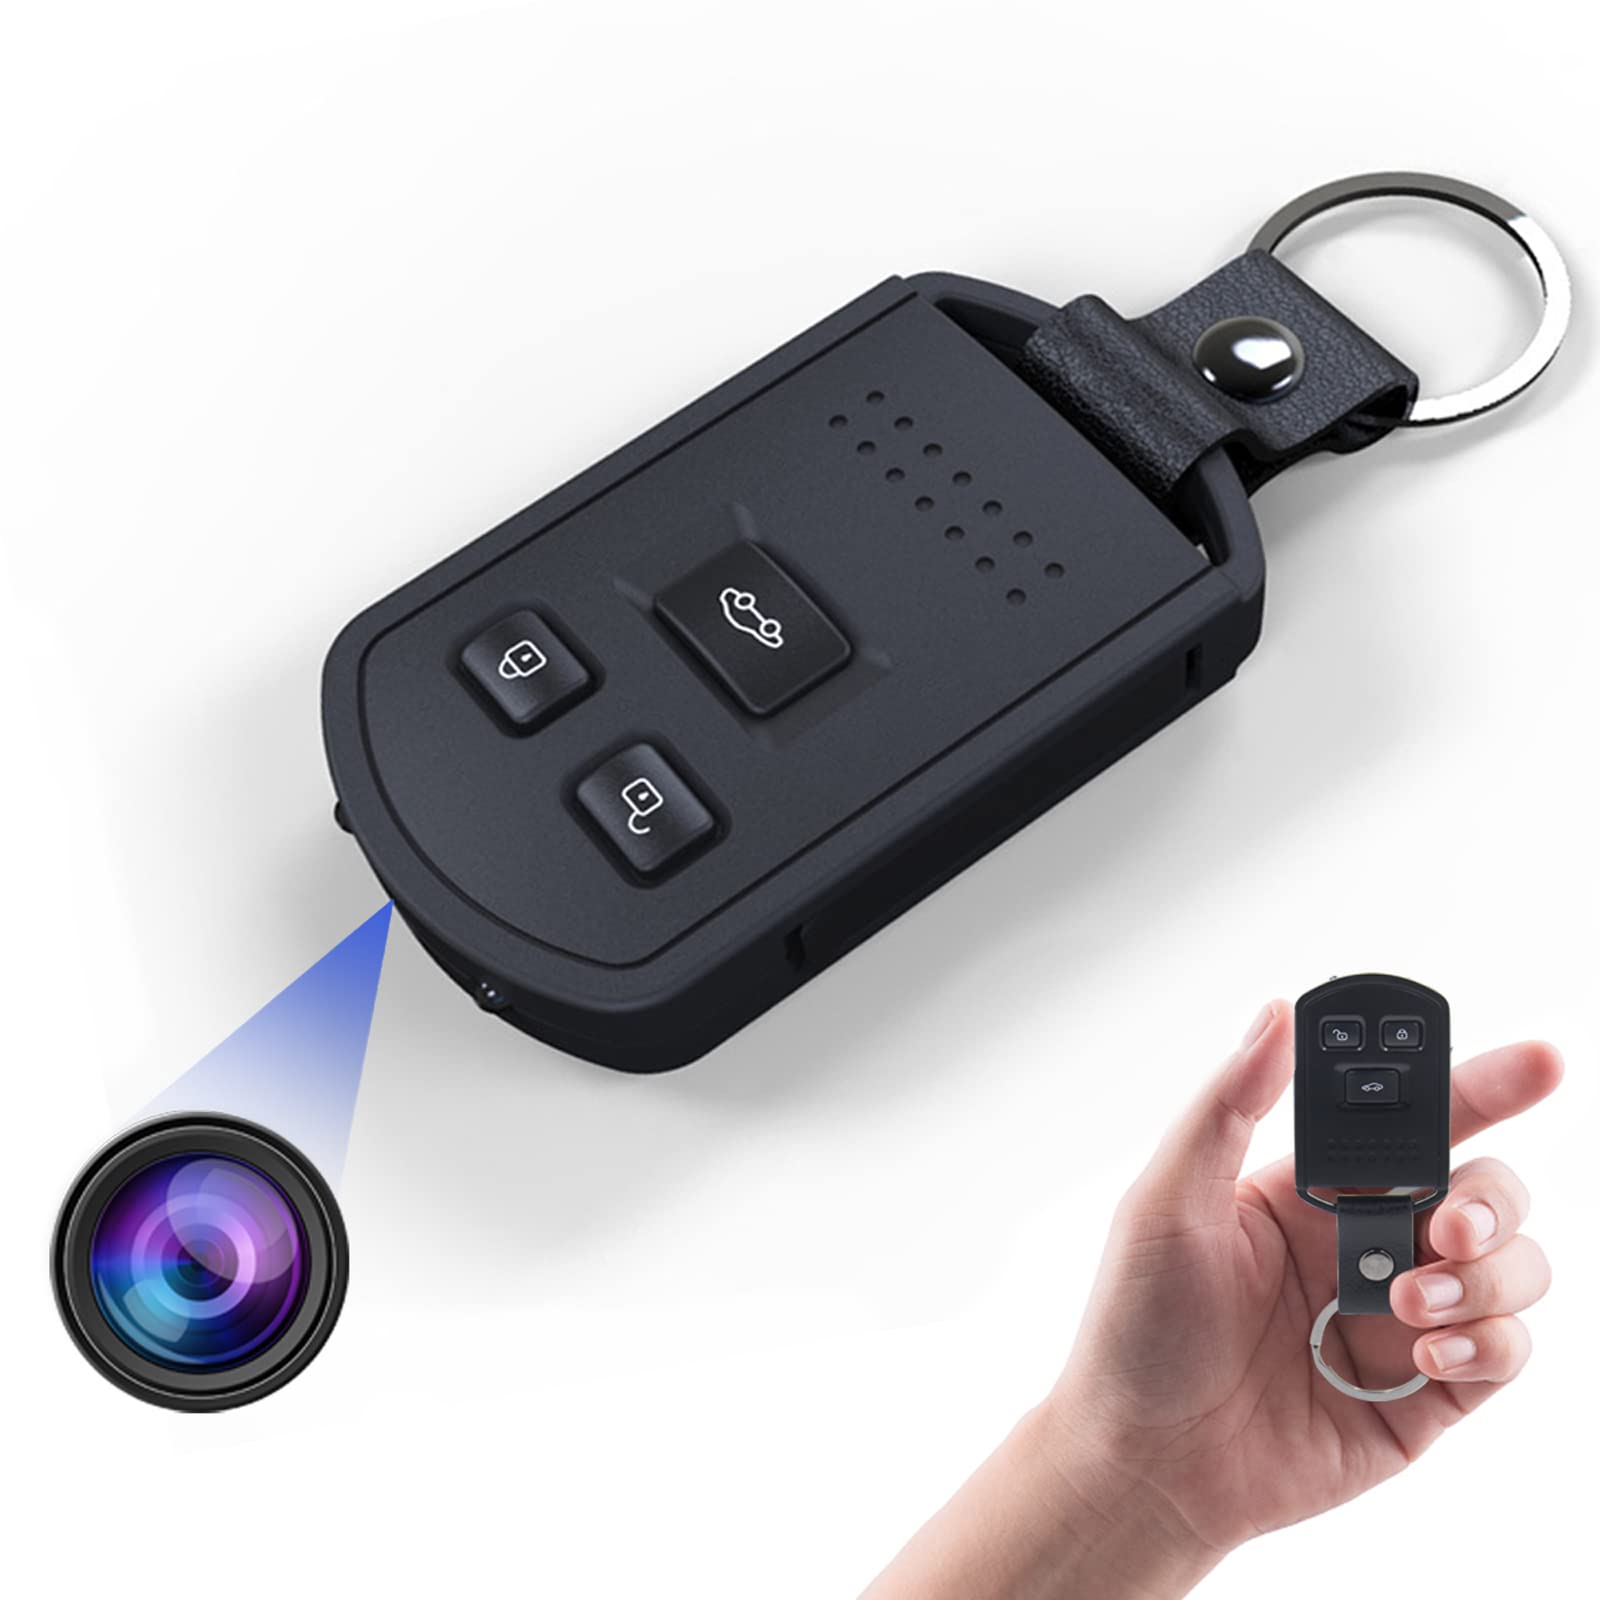 JLRKENG Hidden Camera Car Key - HD 1080P Spy Cam for Indoor and Outdoor Surveillance